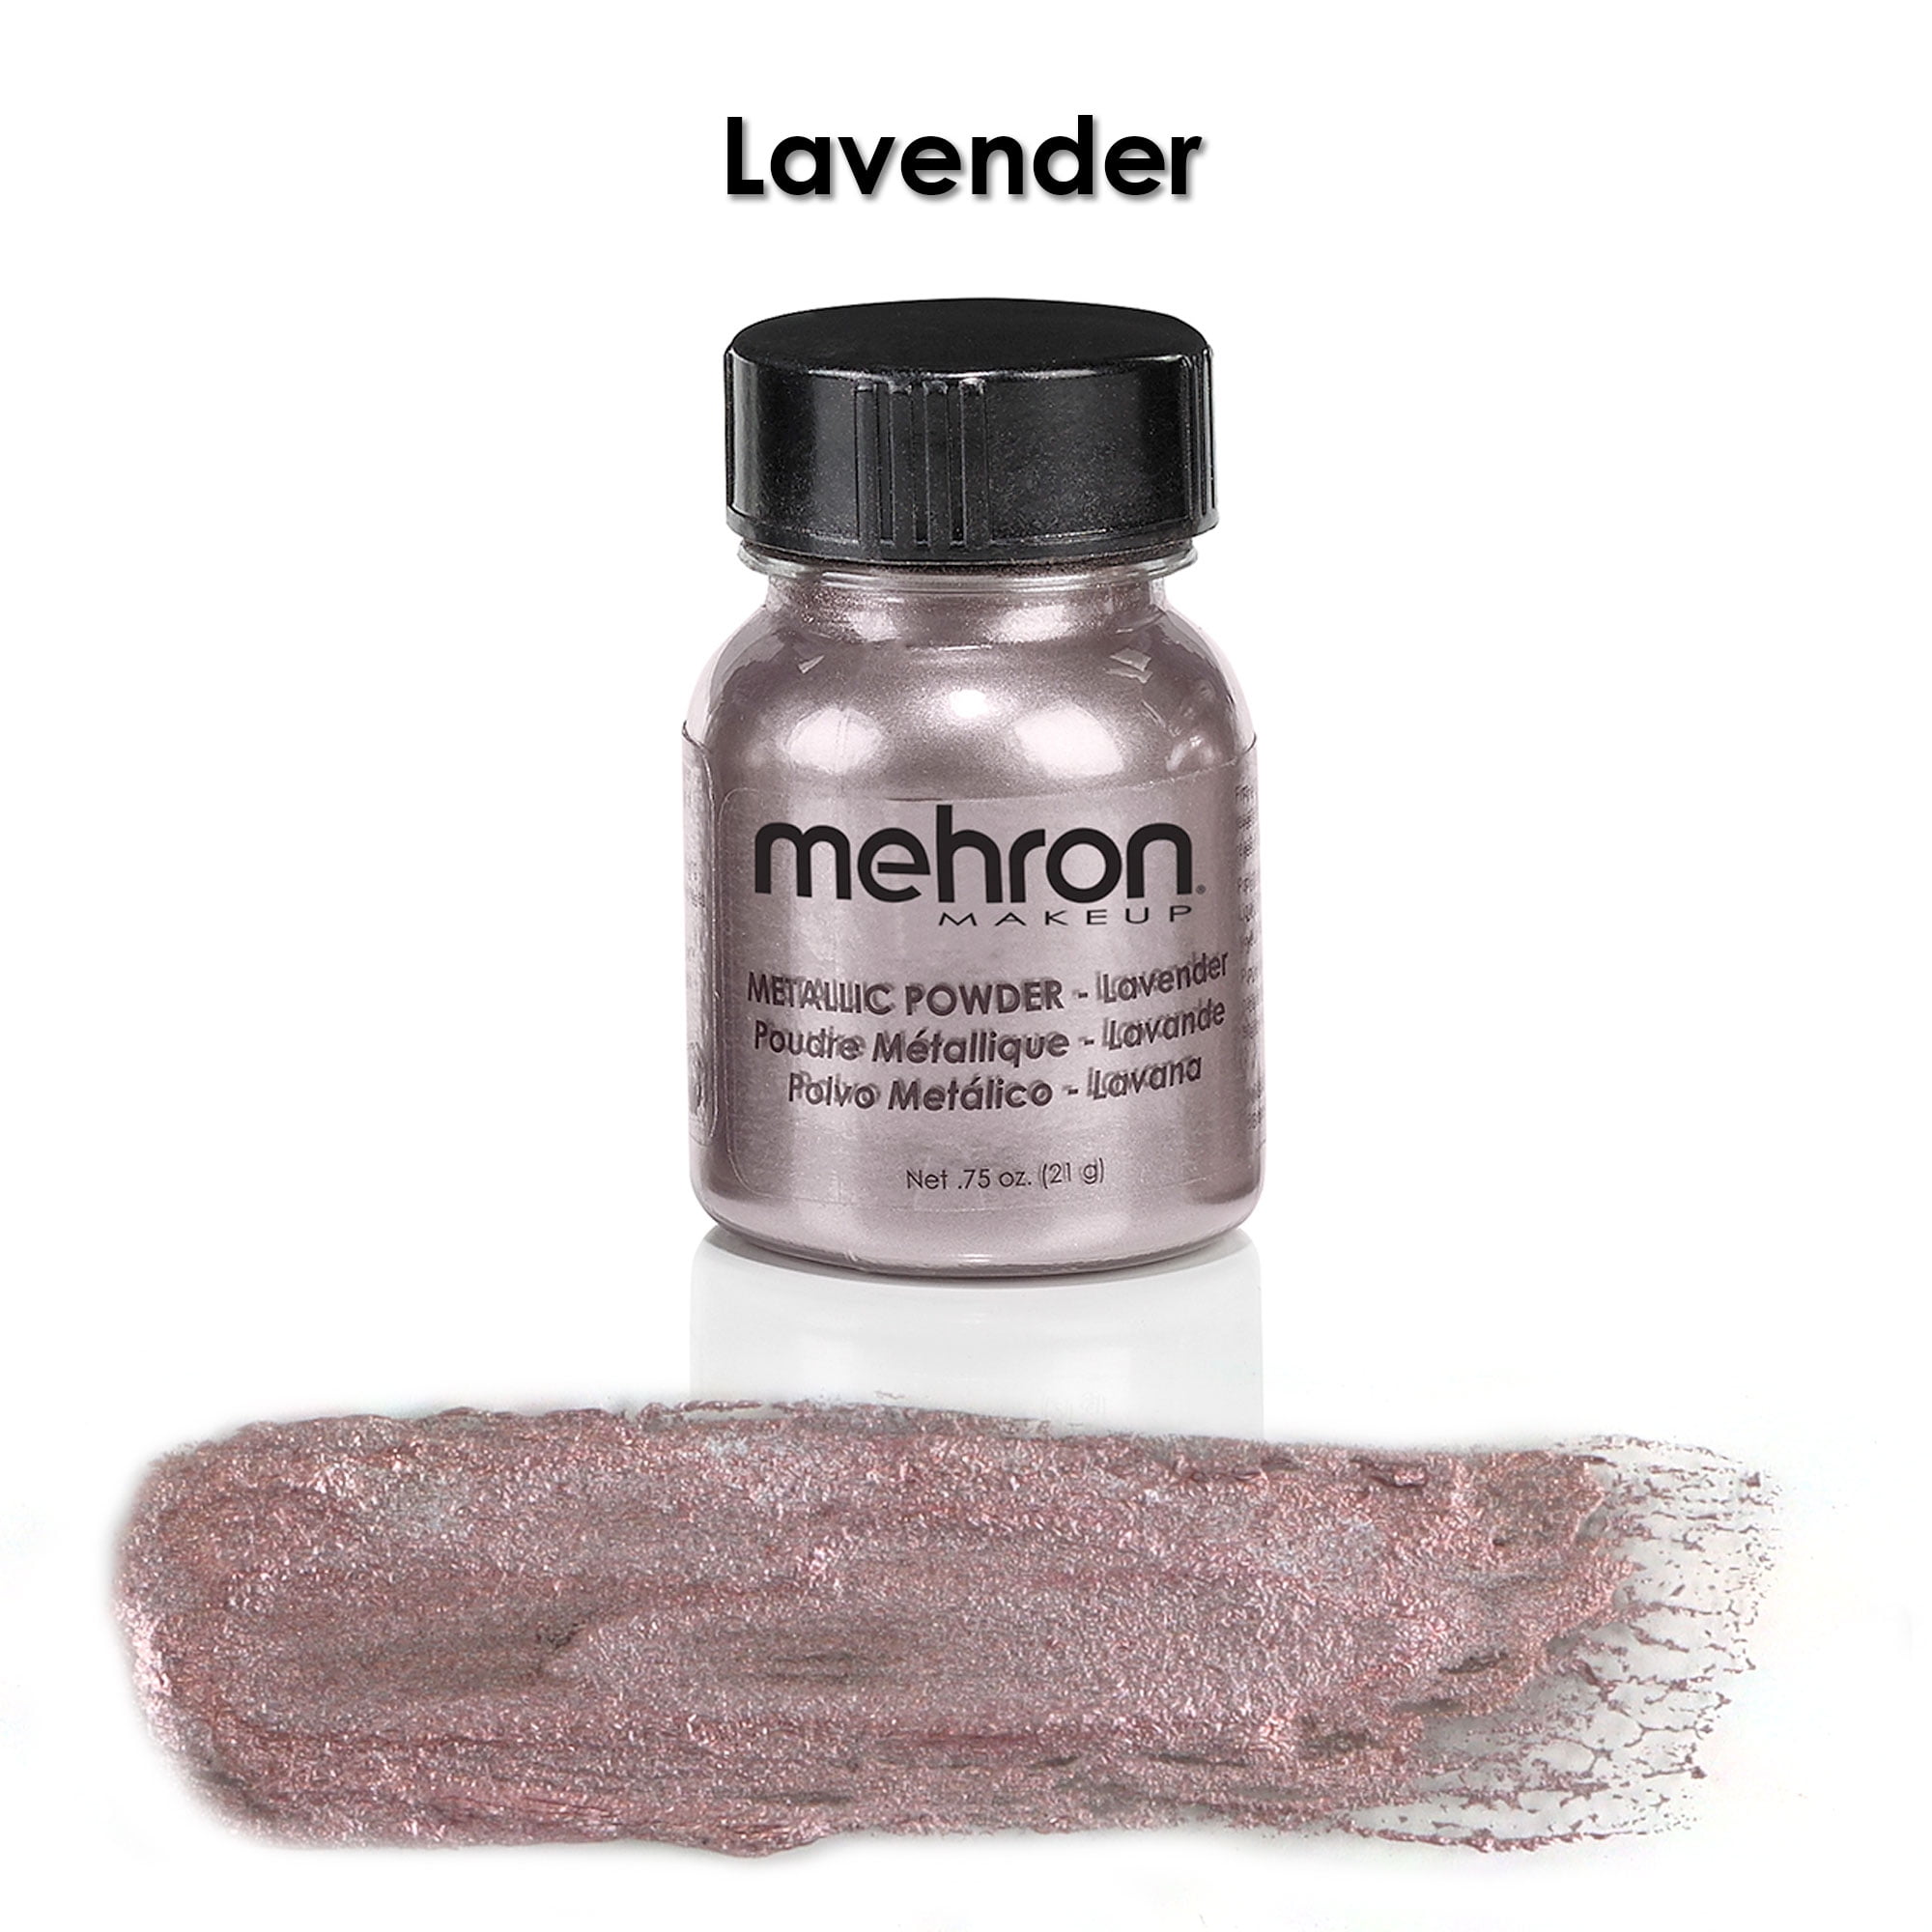 Mehron Makeup Metallic Powder (1 oz) Lavender) 